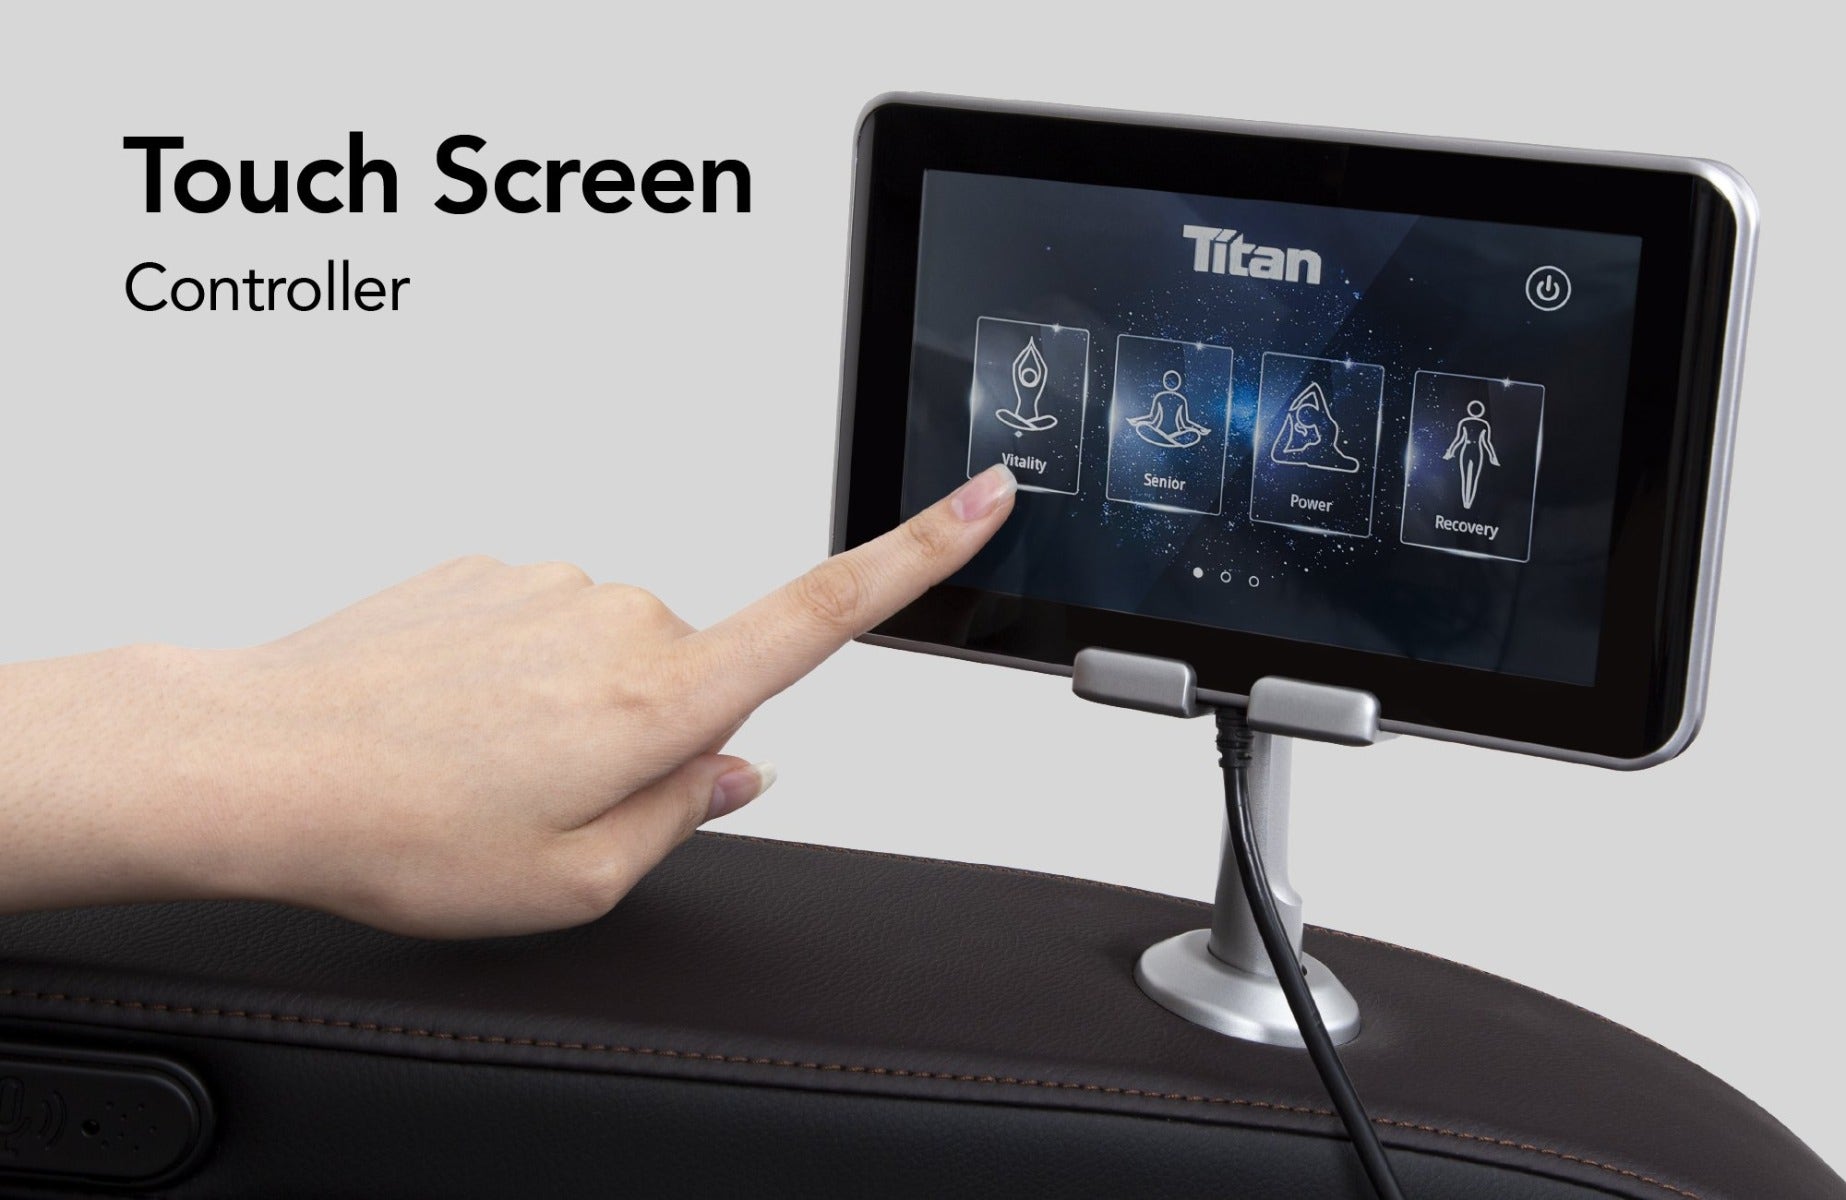 touchscreen tablet remote control of titan jupiter le premium massage chair